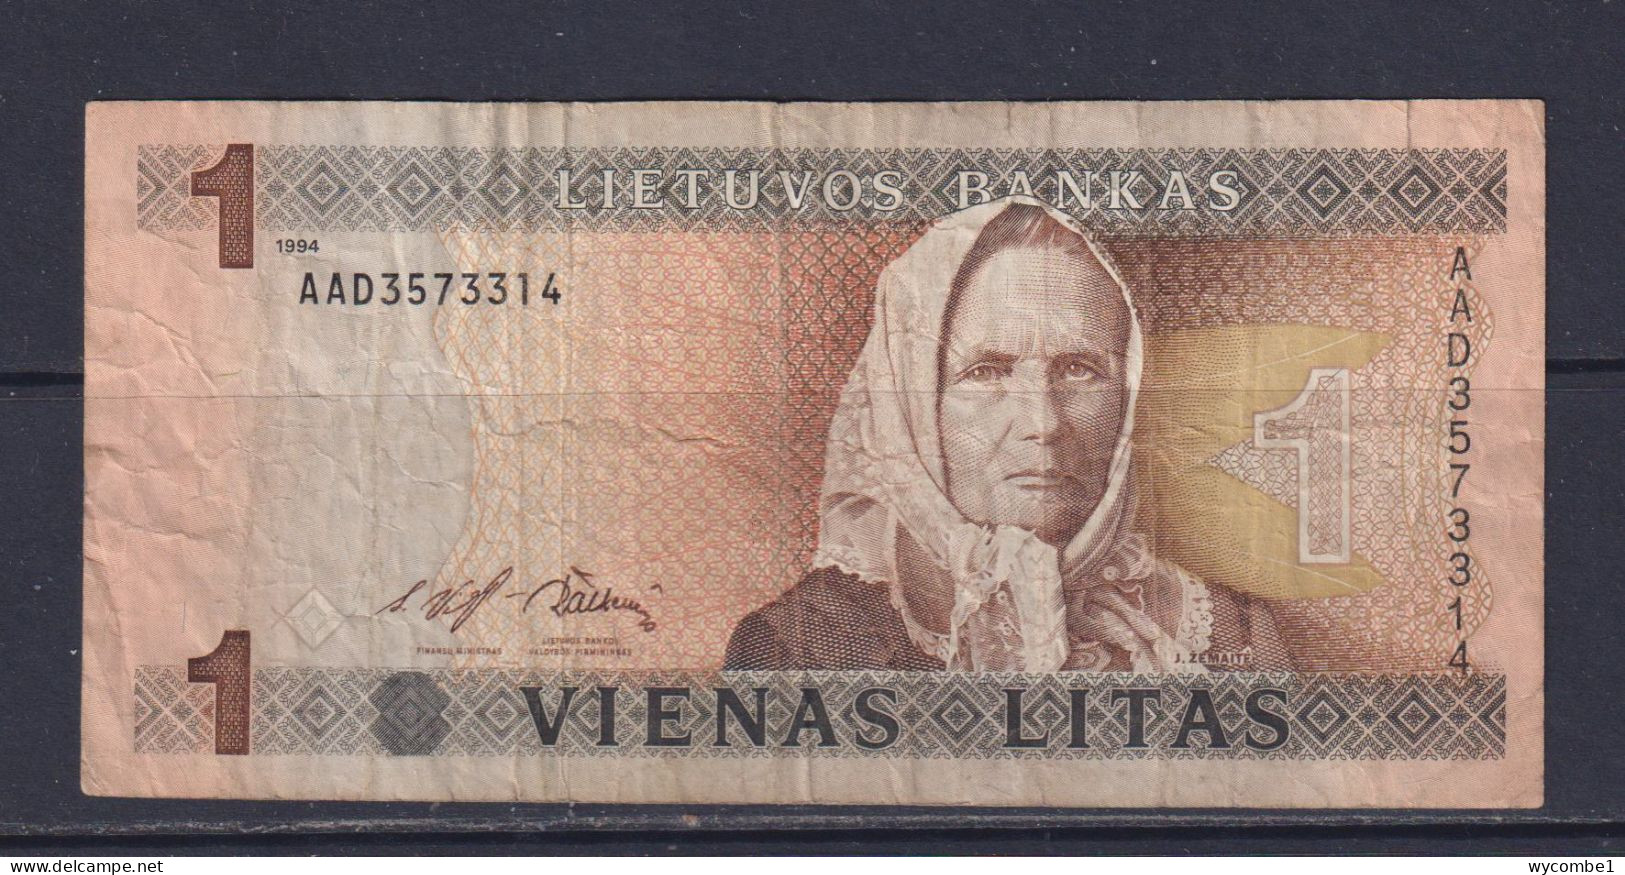 LITHUANIA - 1994 1 Litas Circulated Banknote - Lituania